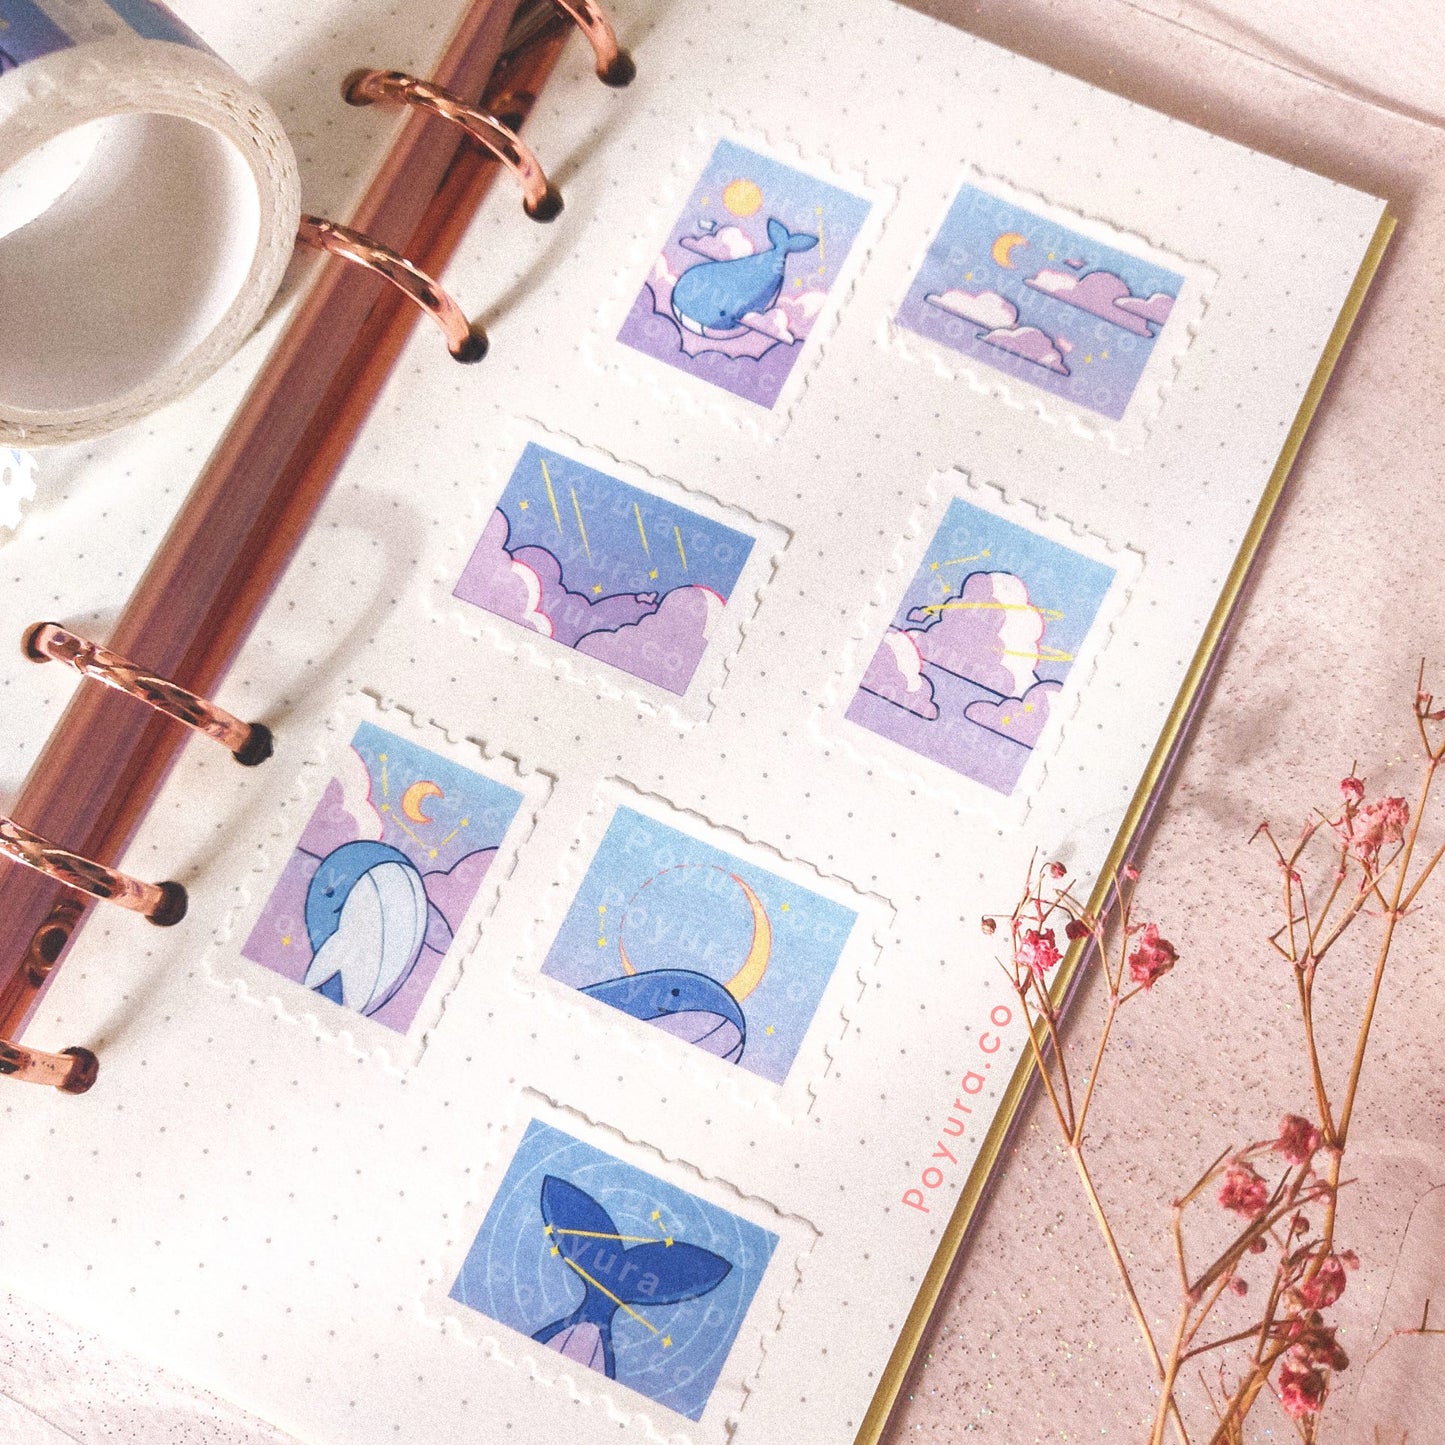 Raimu whale sky galaxy dreamy magical aesthetic moon star stamp washi tape journal polco toploader deco